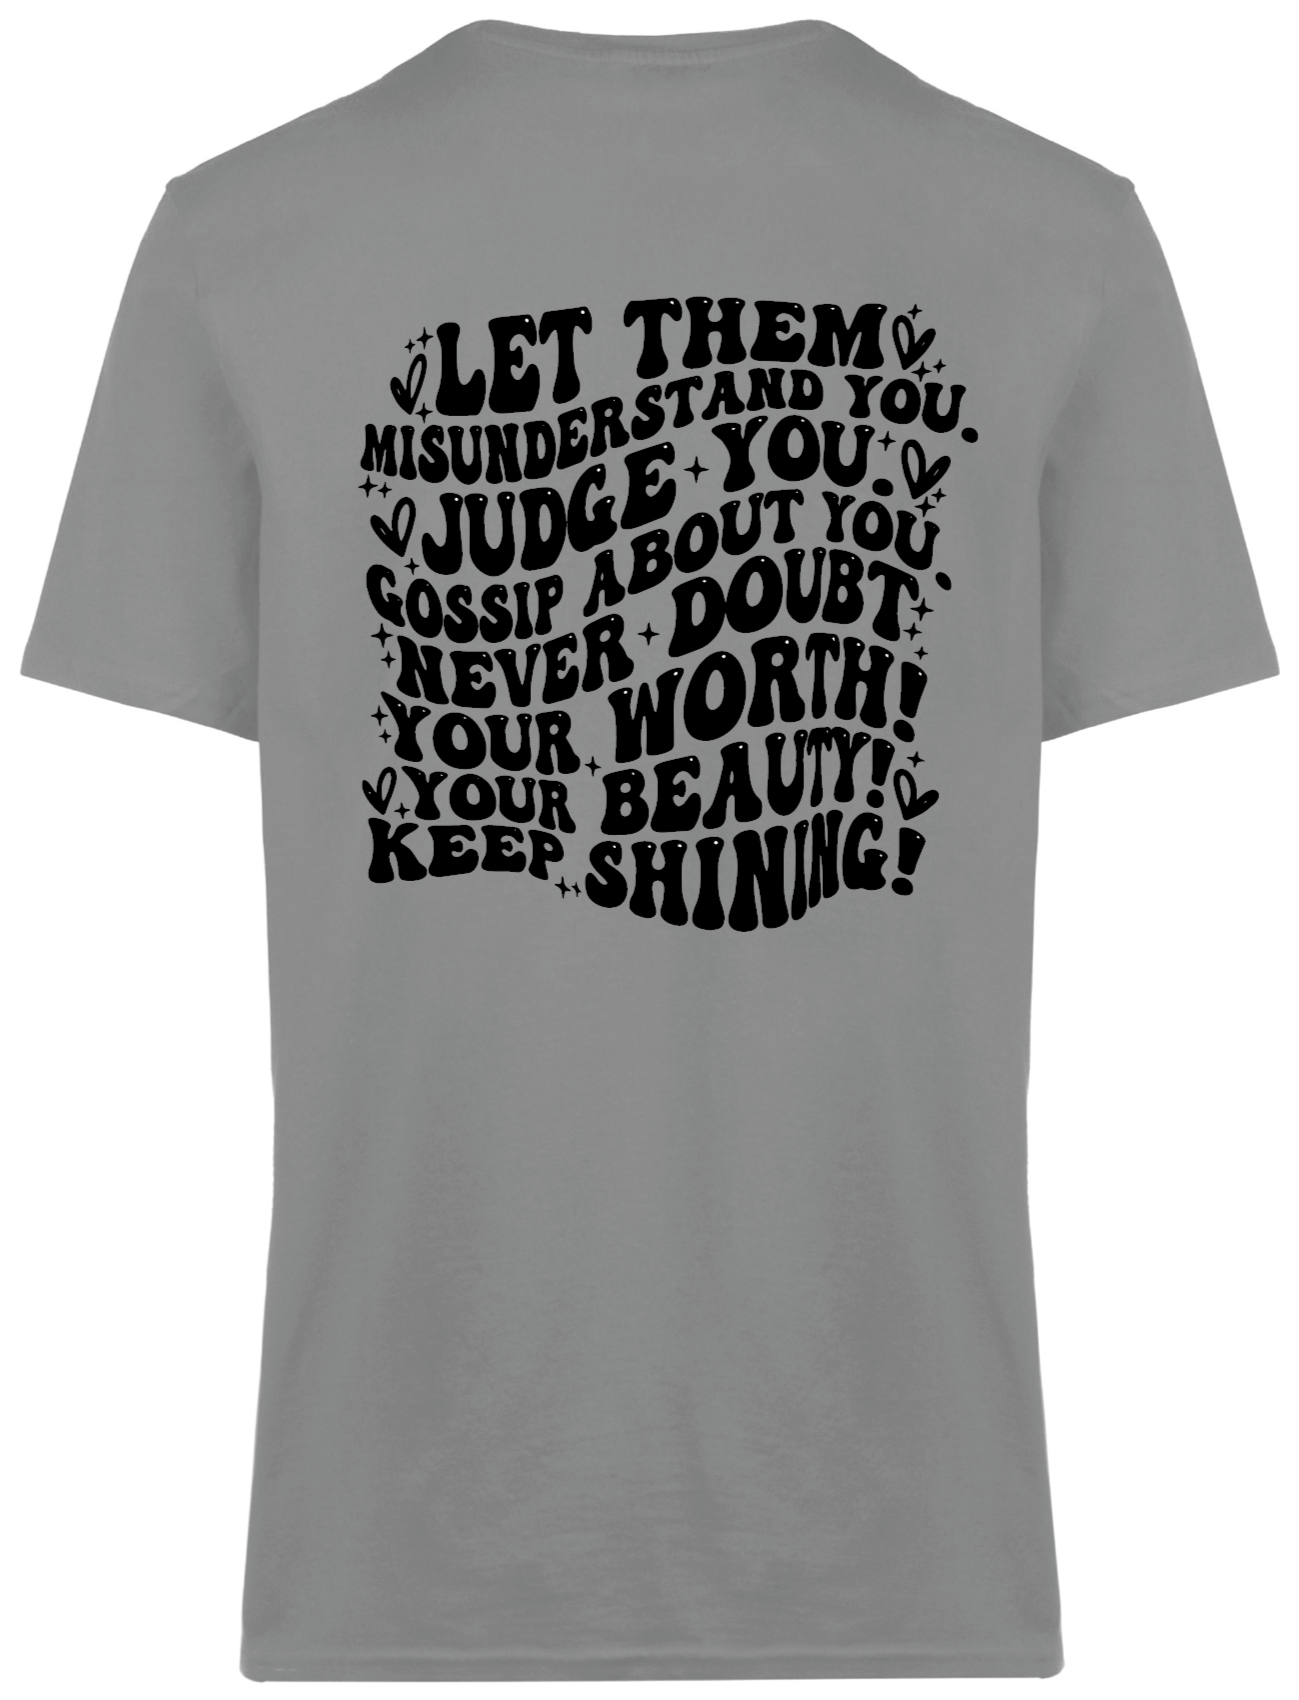 Let Them T-Shirt